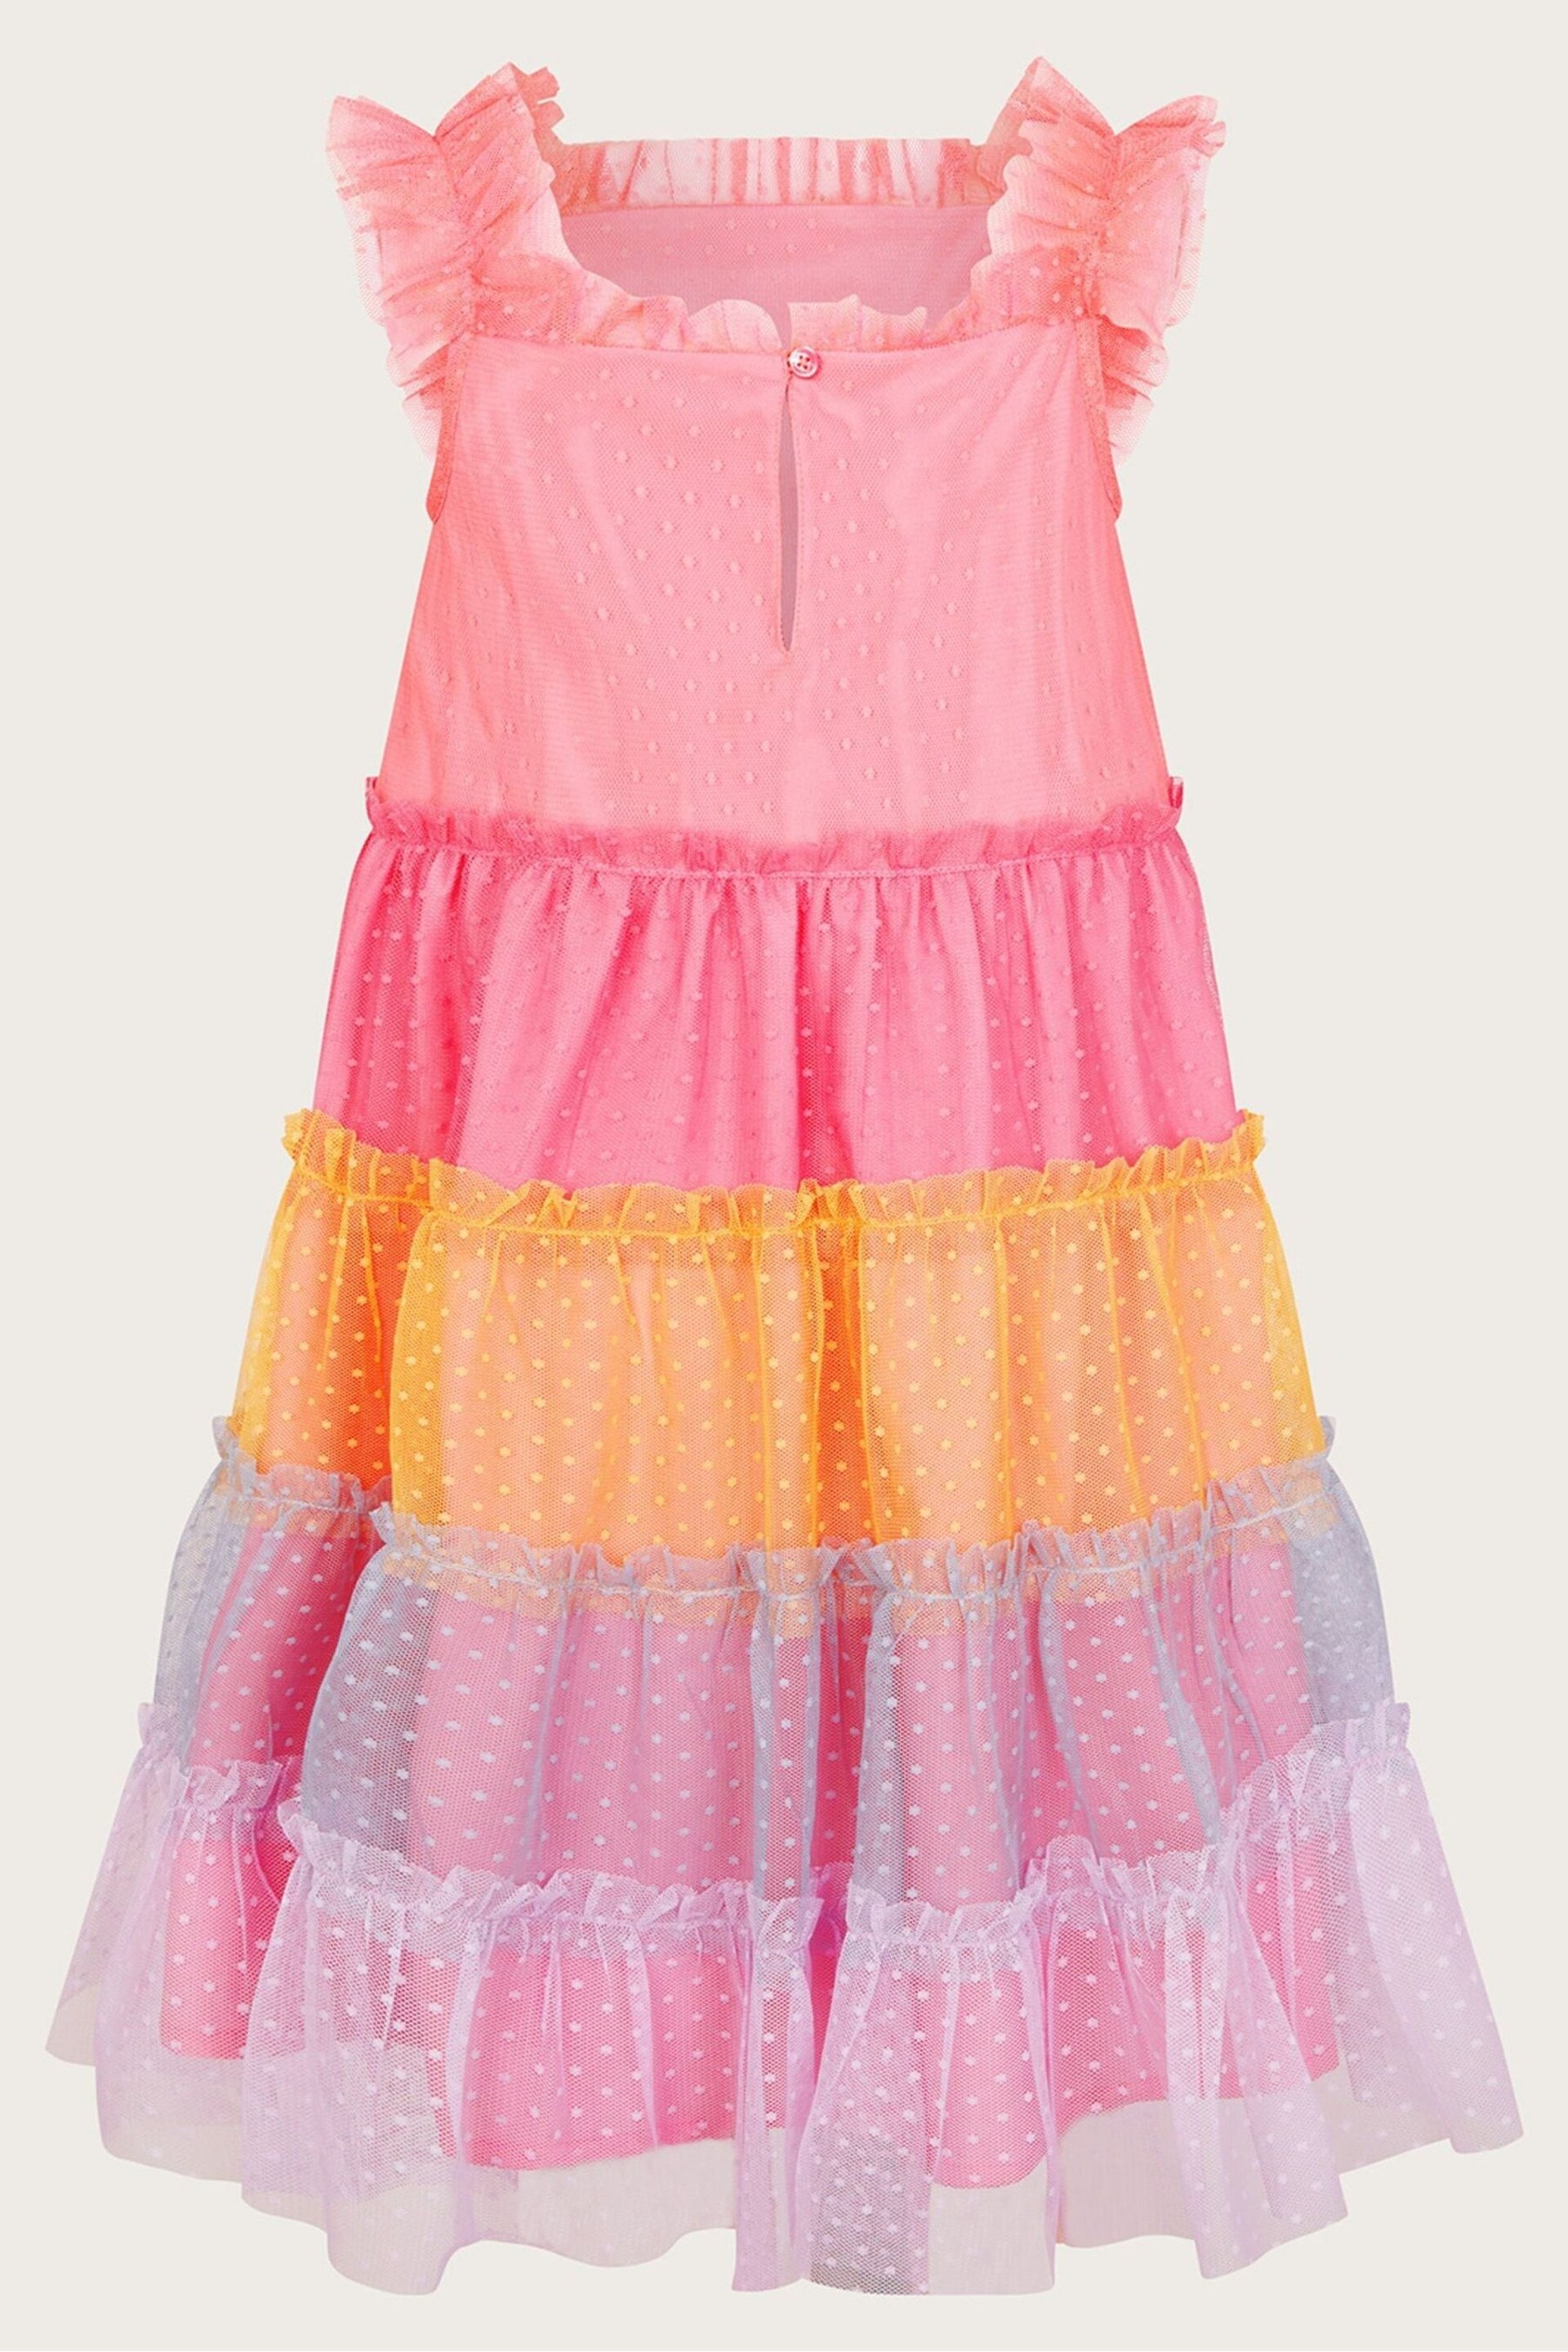 Rainbow Dobby Dress - Image 1 of 3